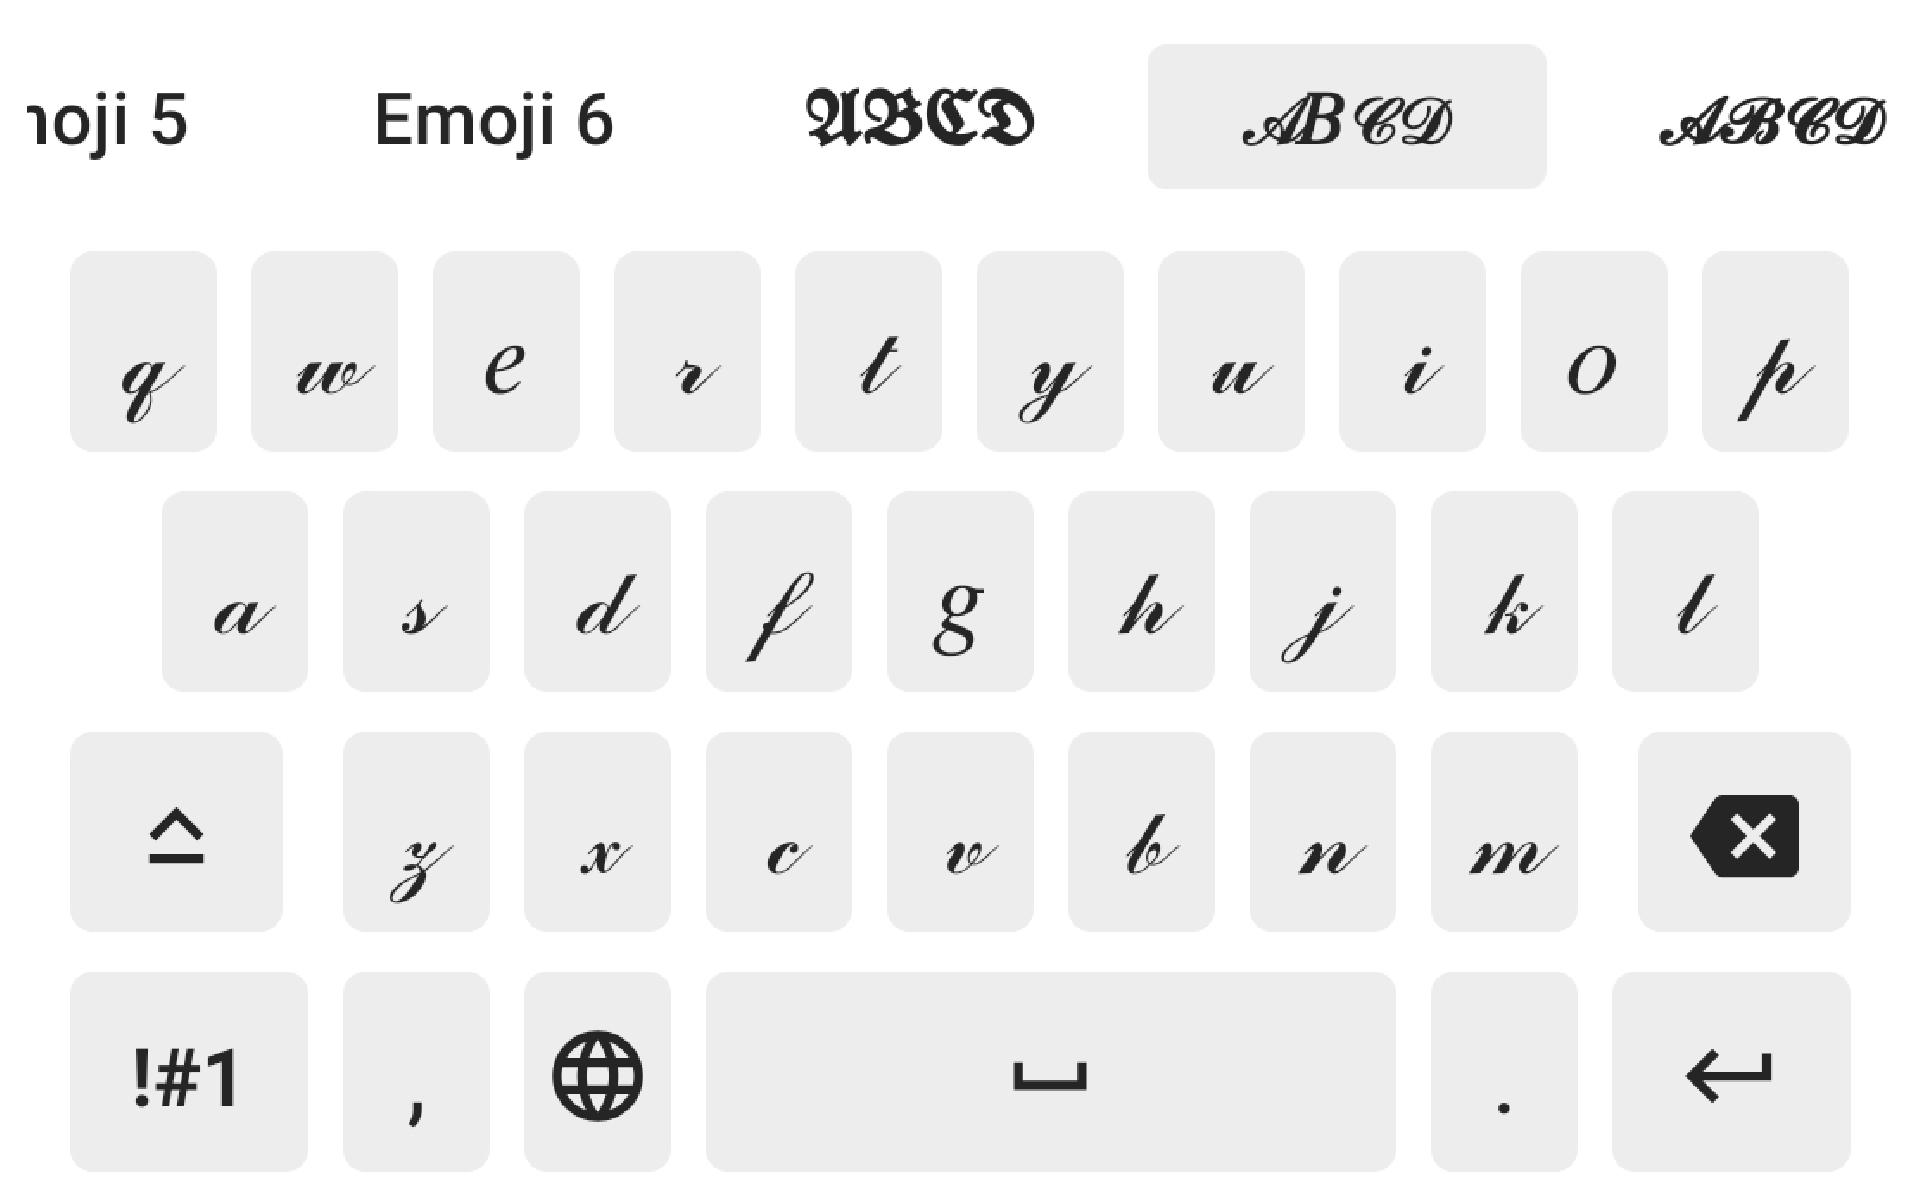 Язык для телефона шрифт. Шрифт на клавиатуре. Красивый шрифт для клавиатуры. Красивый шрифт для клавиатуры на телефоне. Шрифты для клавиатуры на андроид.